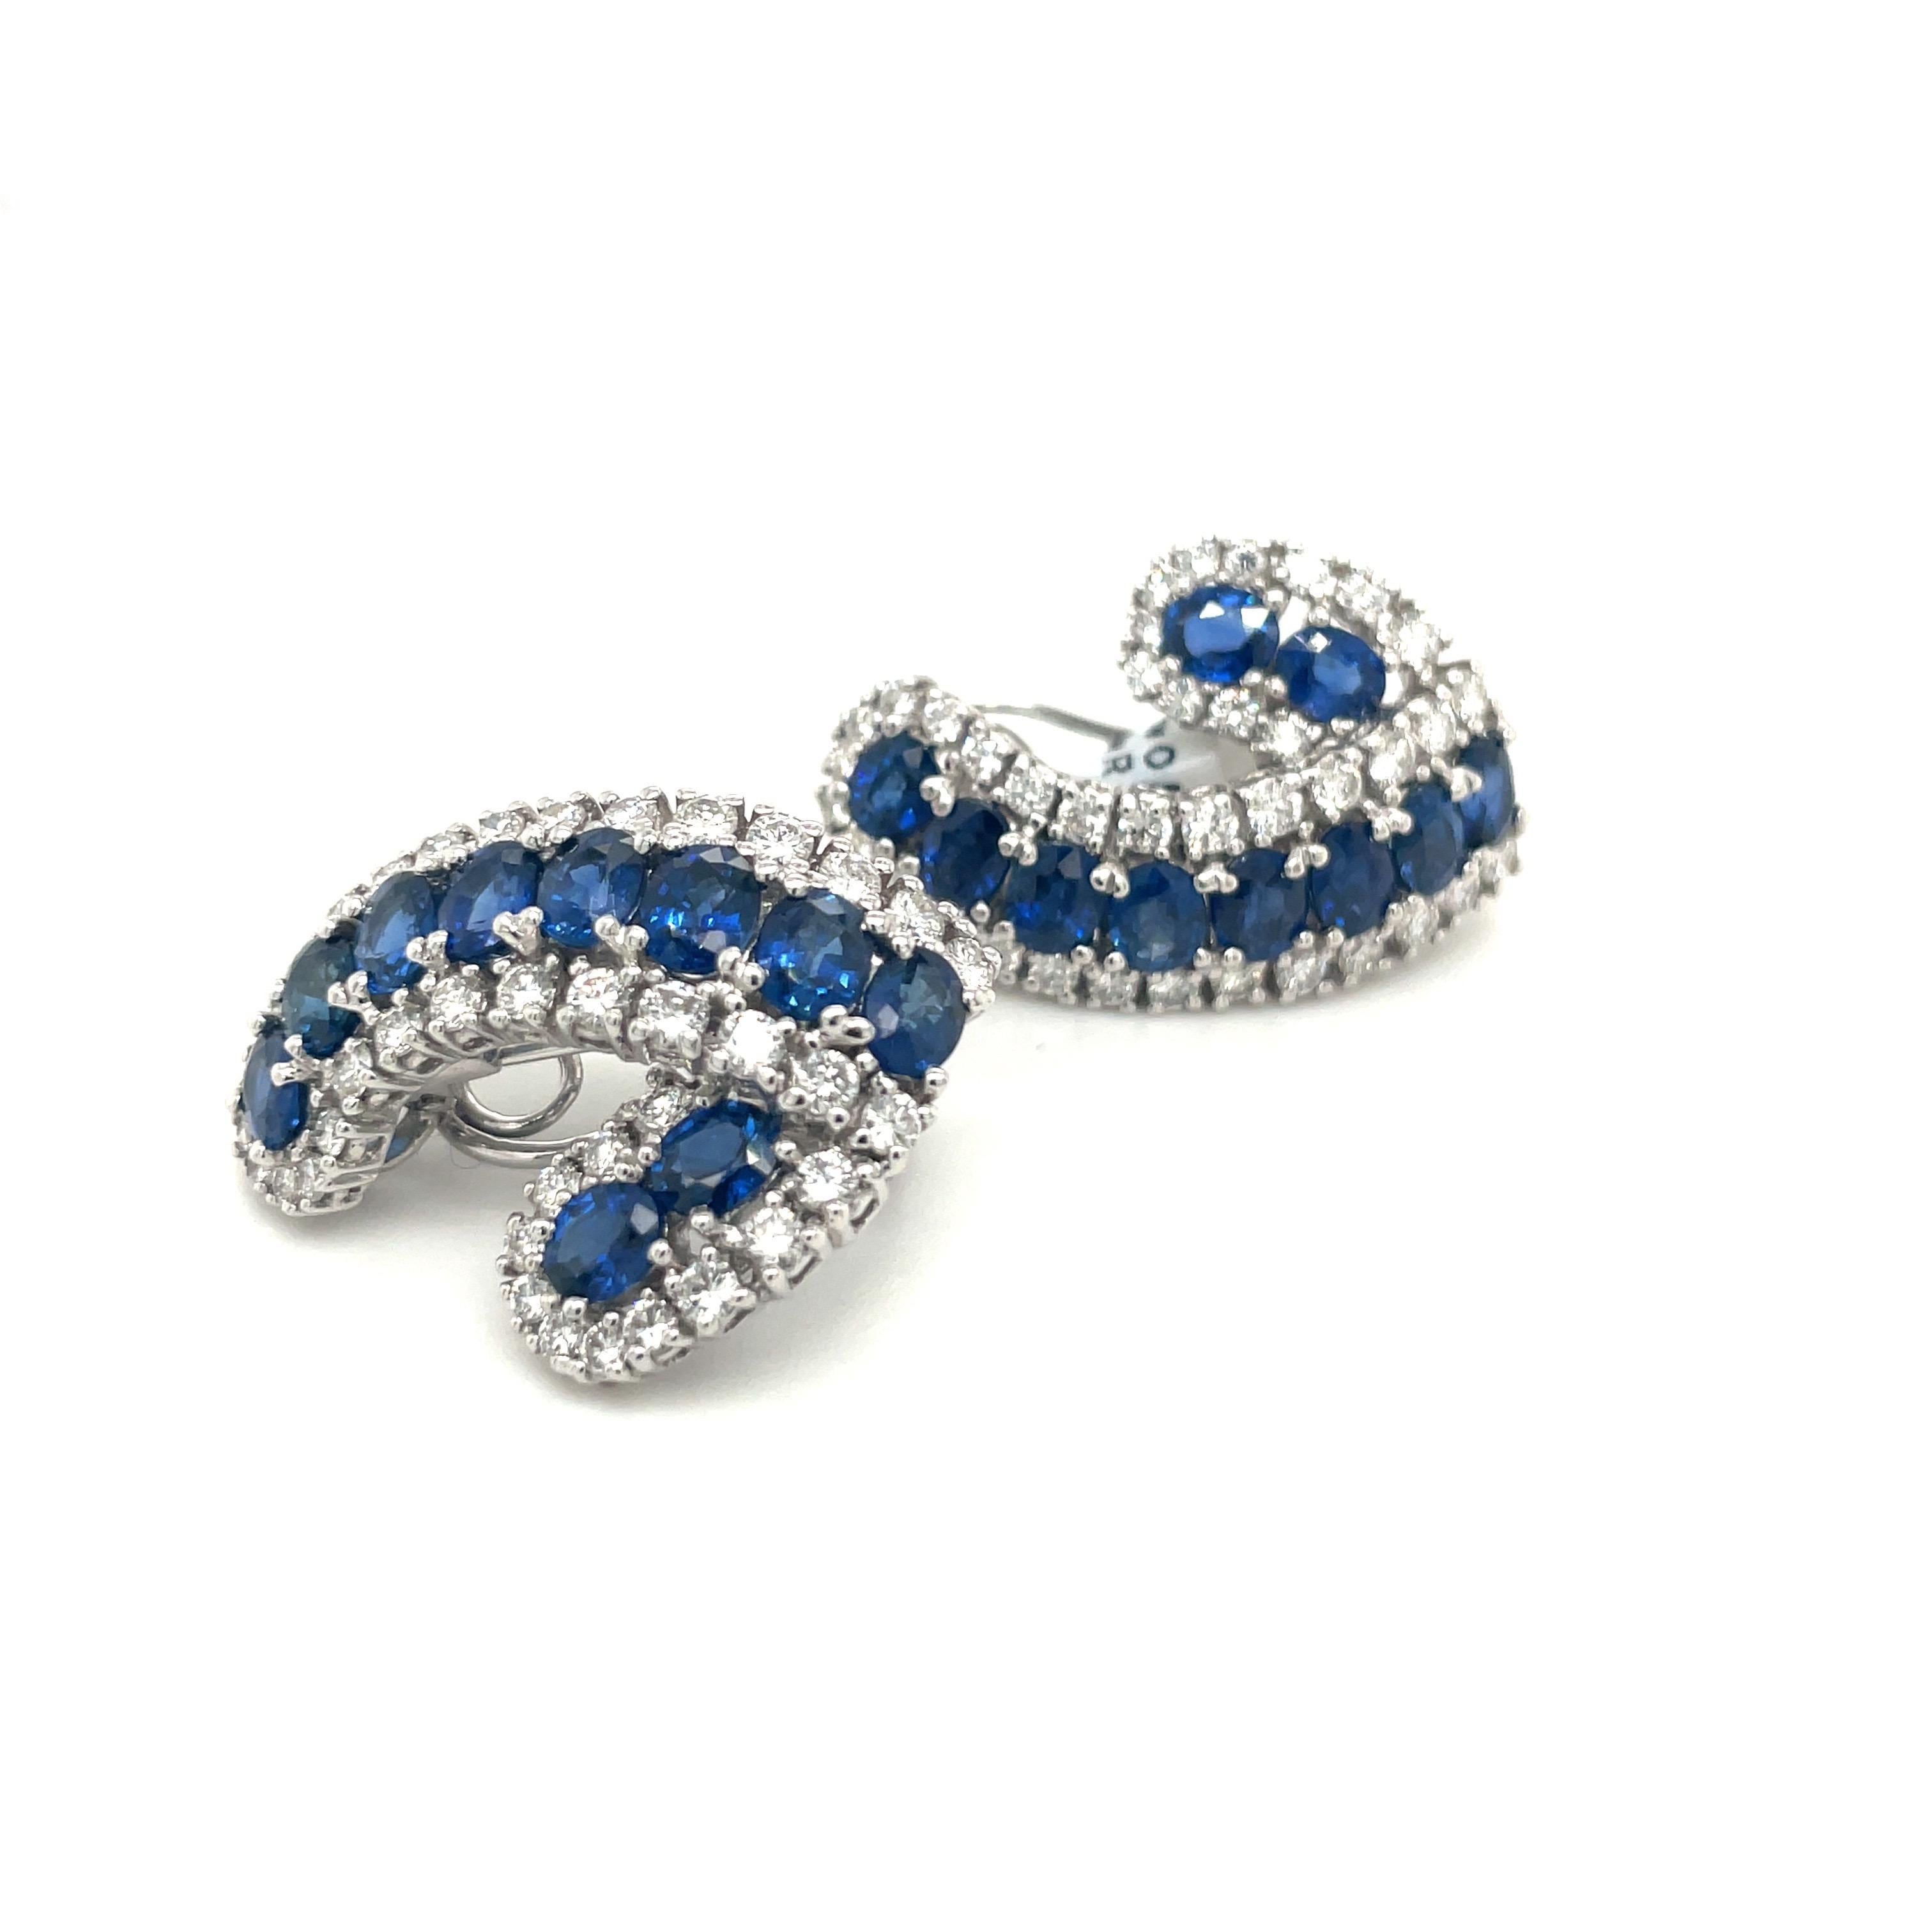 Elegant 18 karat white gold, blue sapphire and diamond earrings. The 